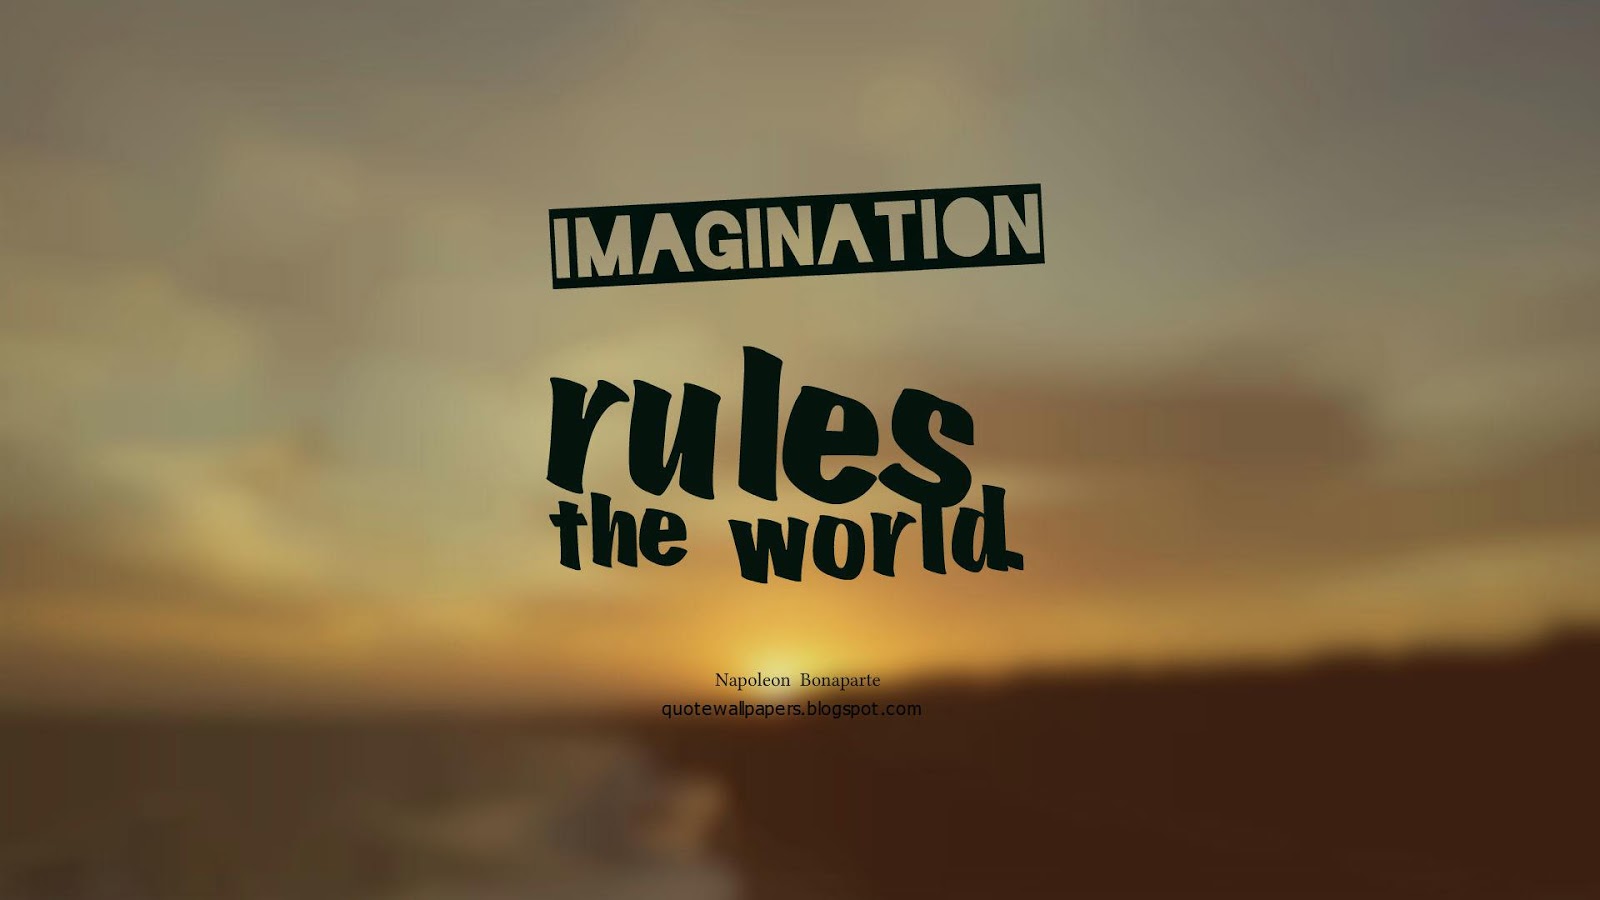 World of imagination. Imagination Rules the World. Леттеринг imagination Rules the World. Imagination Rules the World картинка. Imagination Rules the World (воображение правит миром).